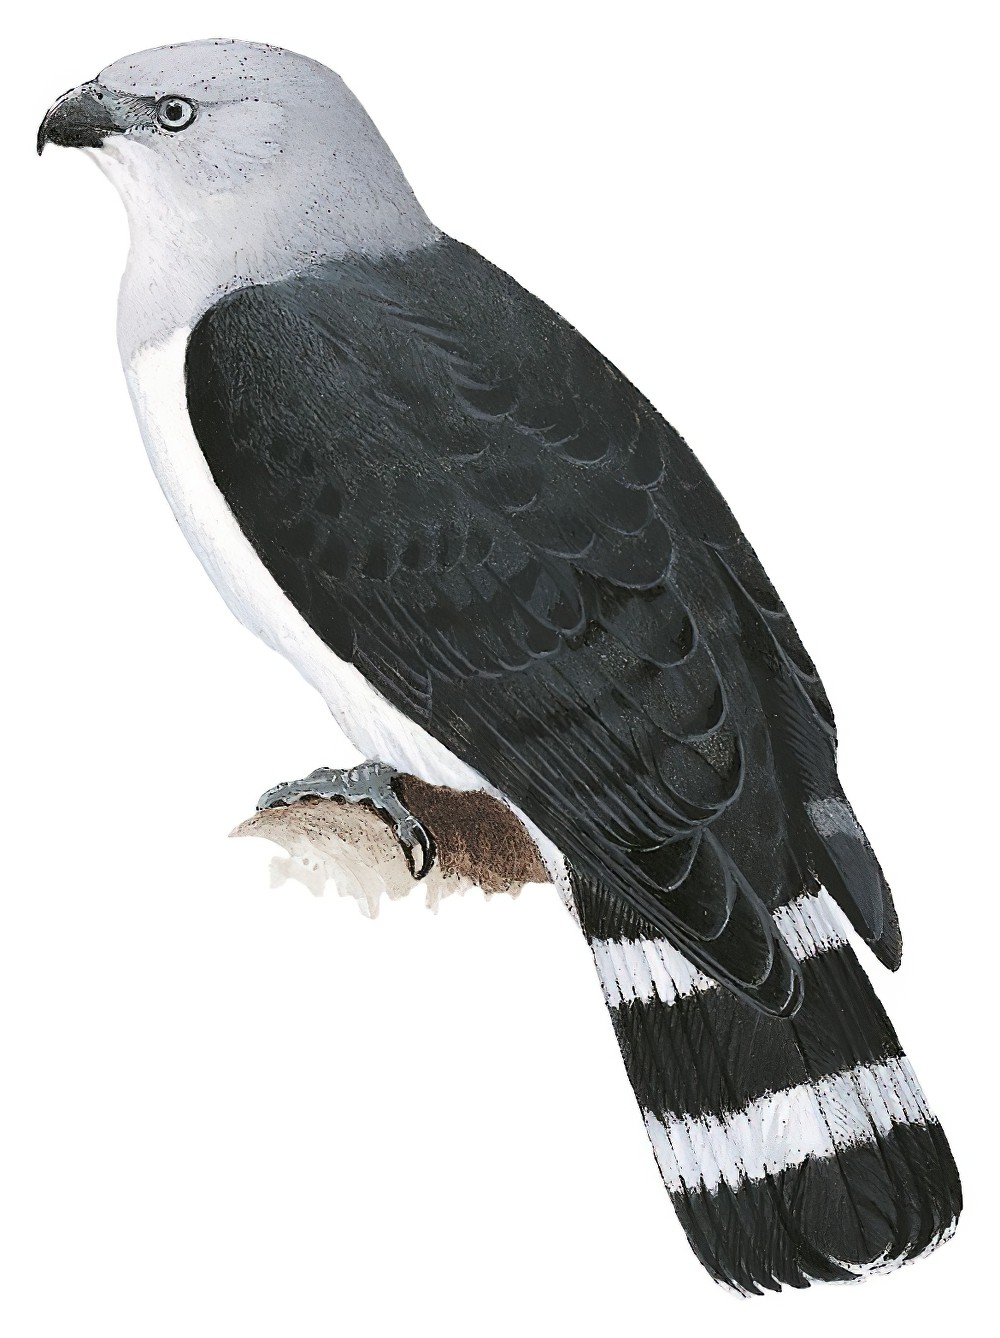 Gray-headed Kite / Leptodon cayanensis